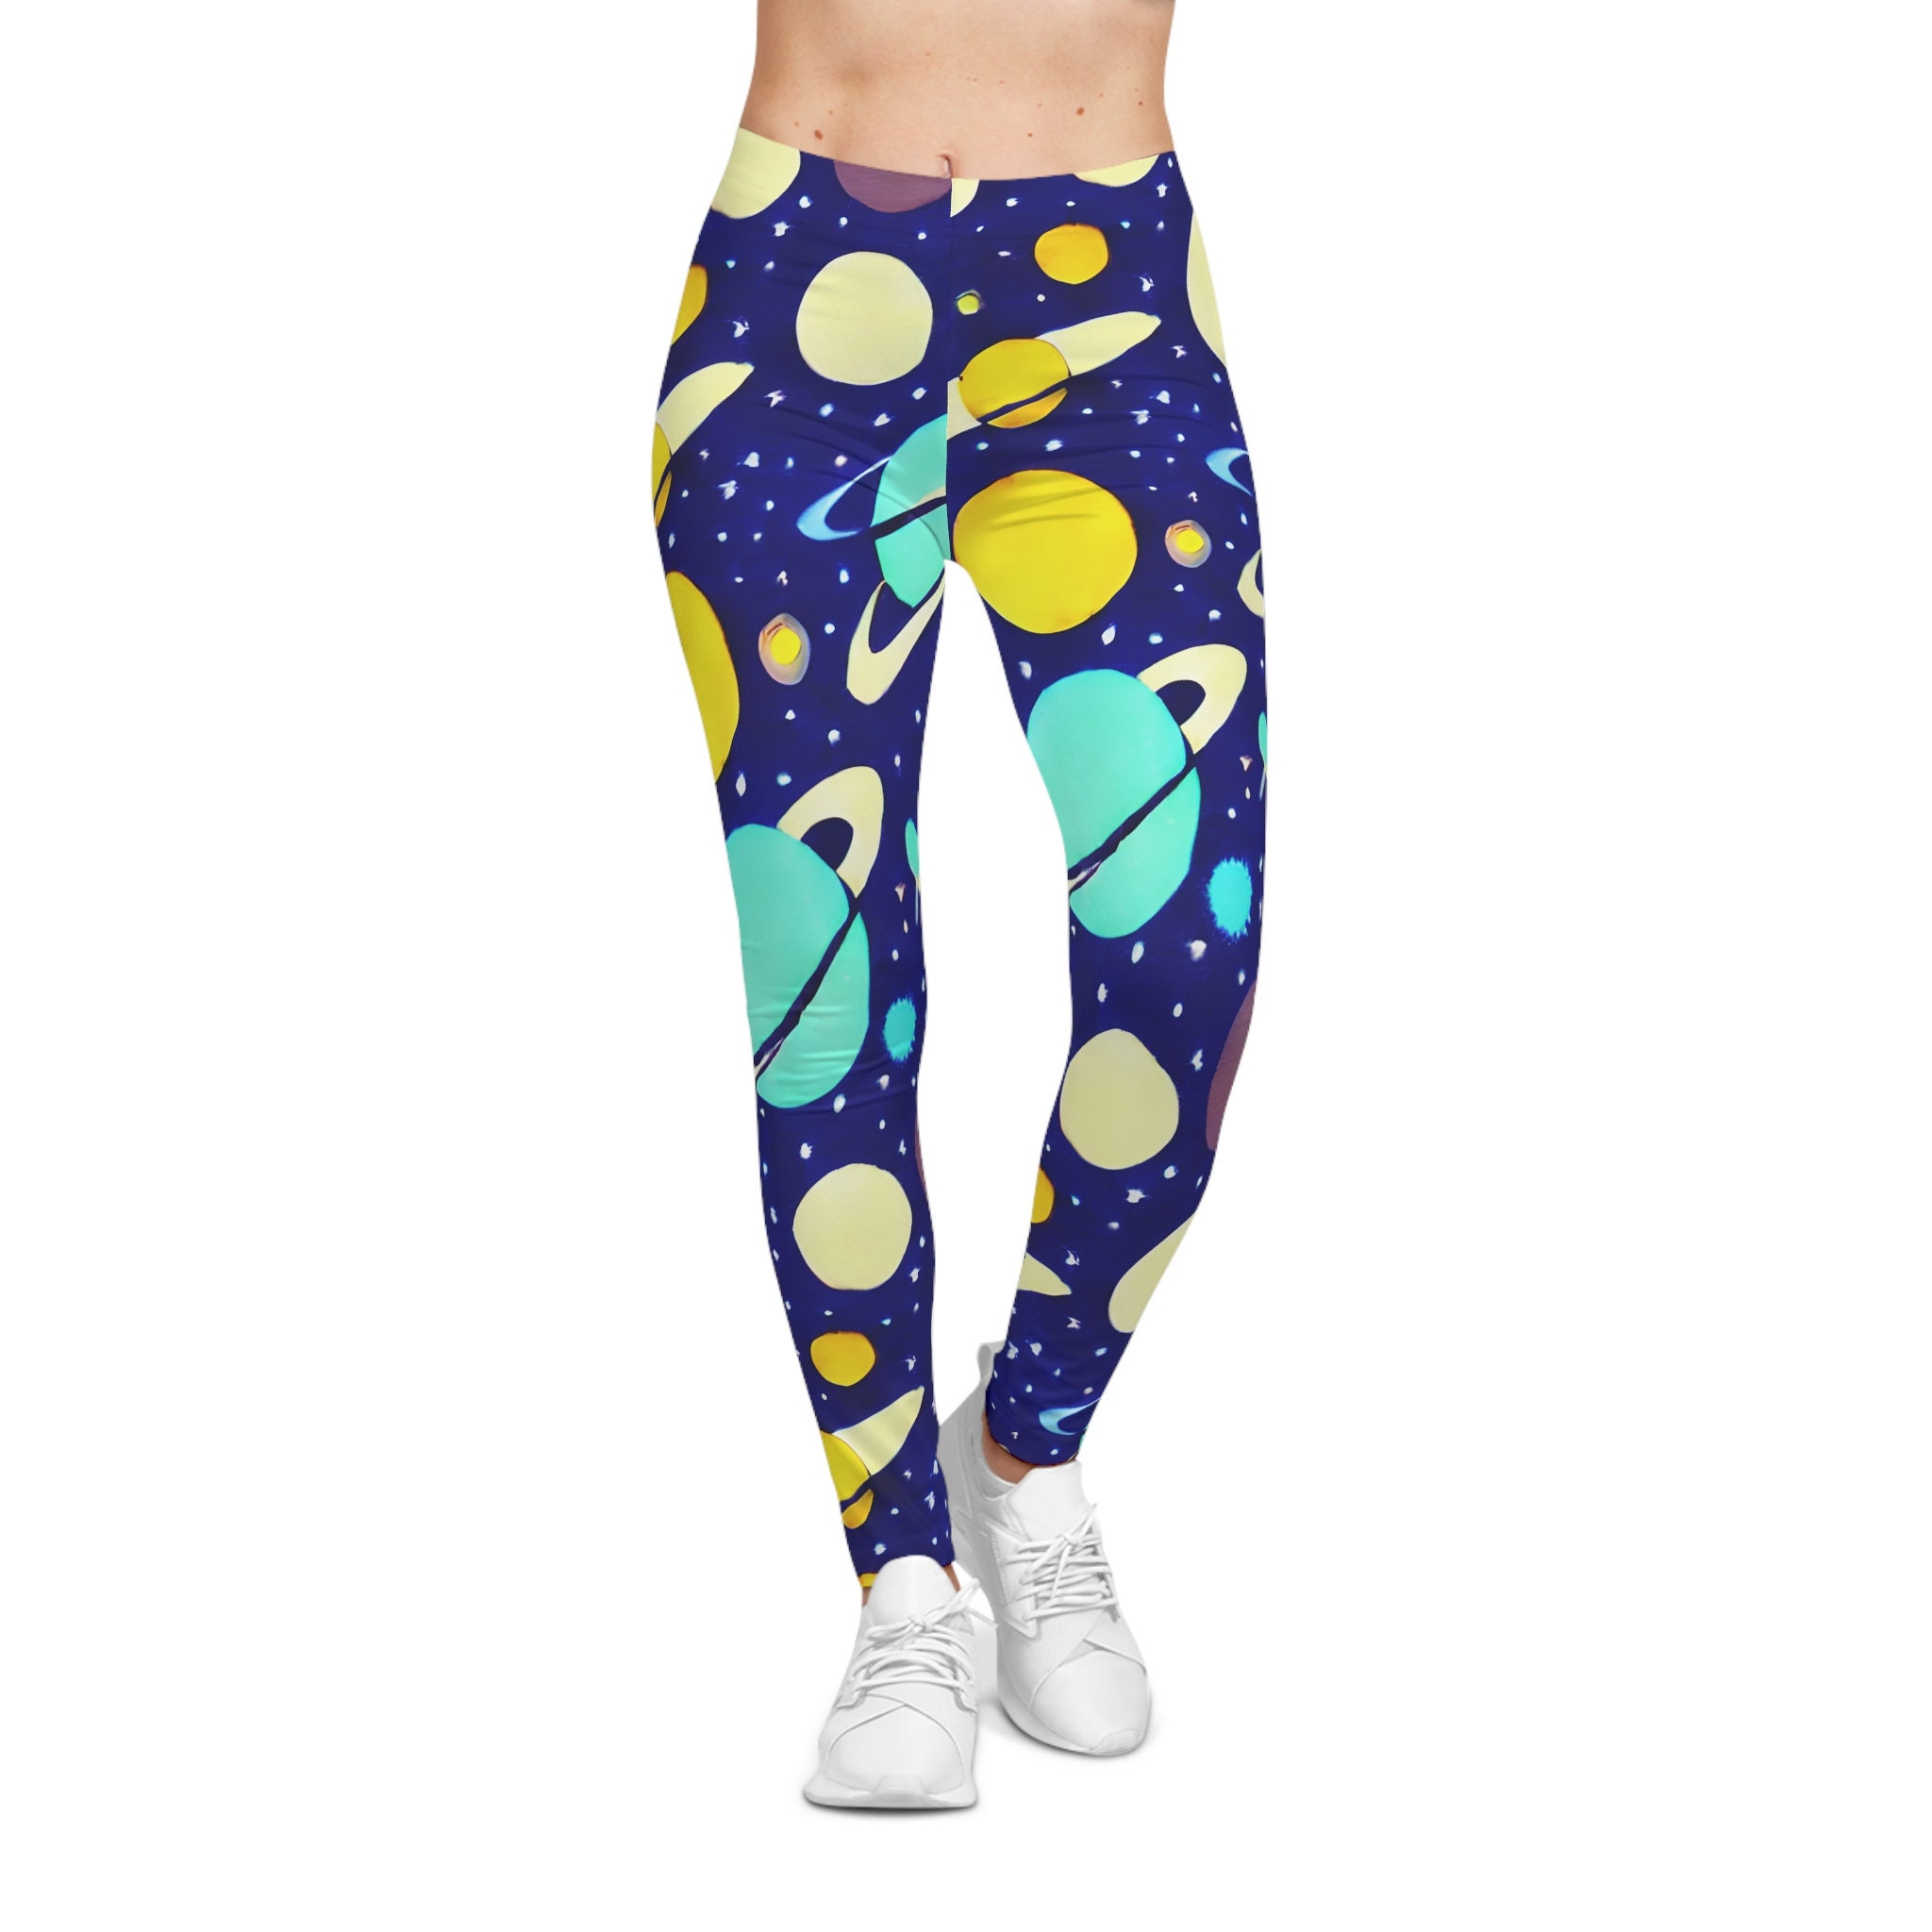 Galaxy Leggings, Yoga Space Print Pants, Blue Cosmic Celestial